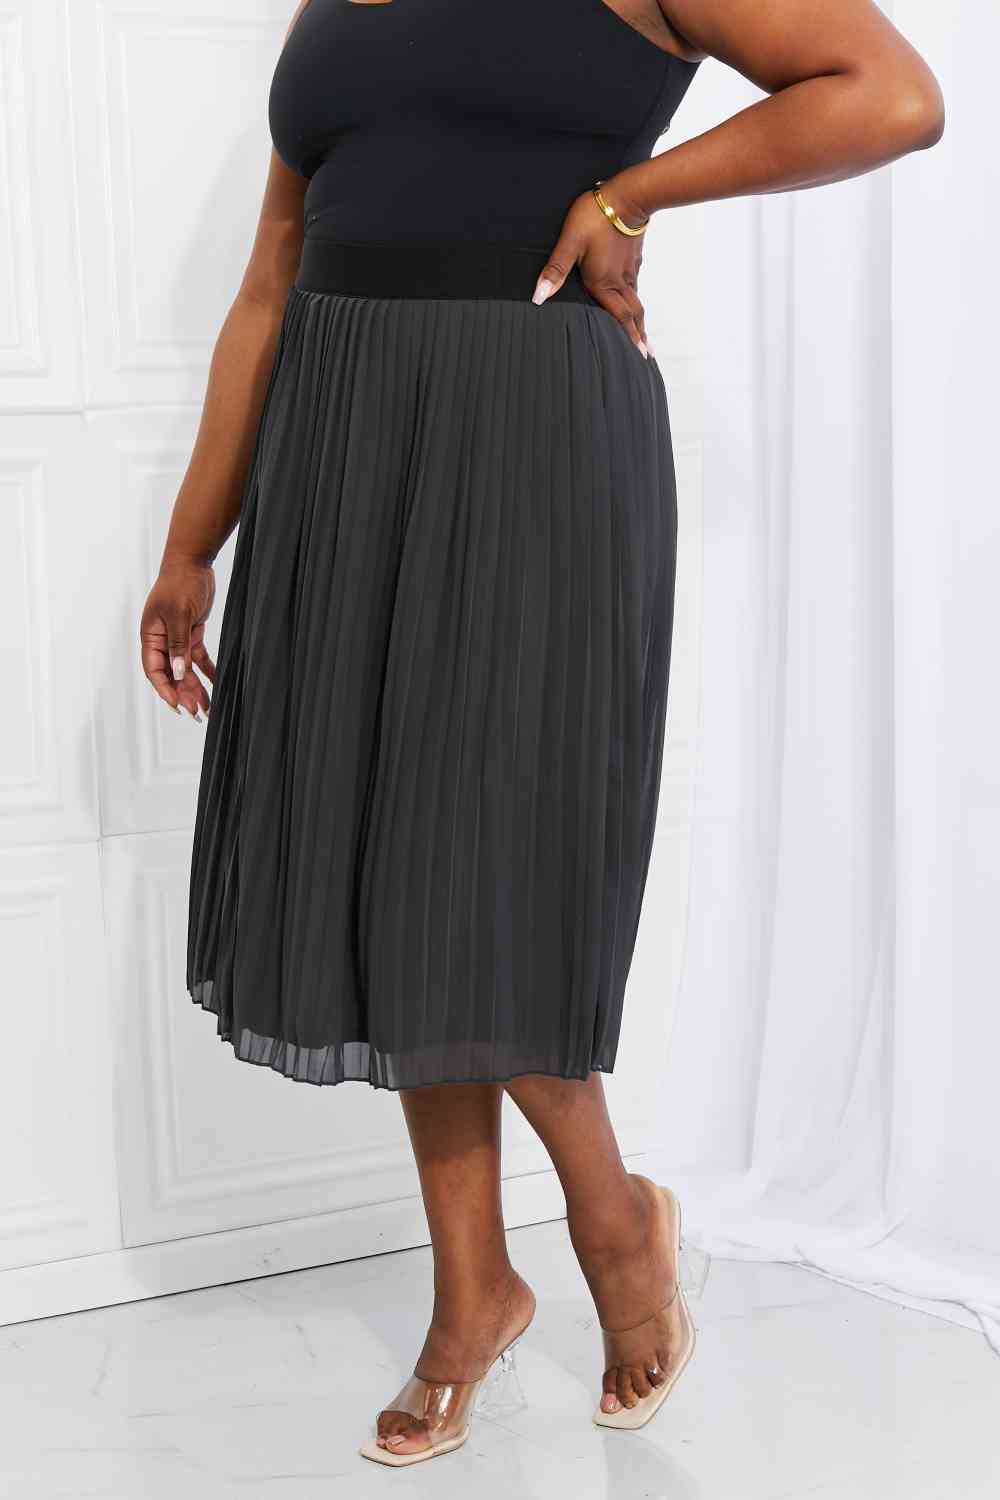 Dark Gray Pleated Chiffon Midi Skirt